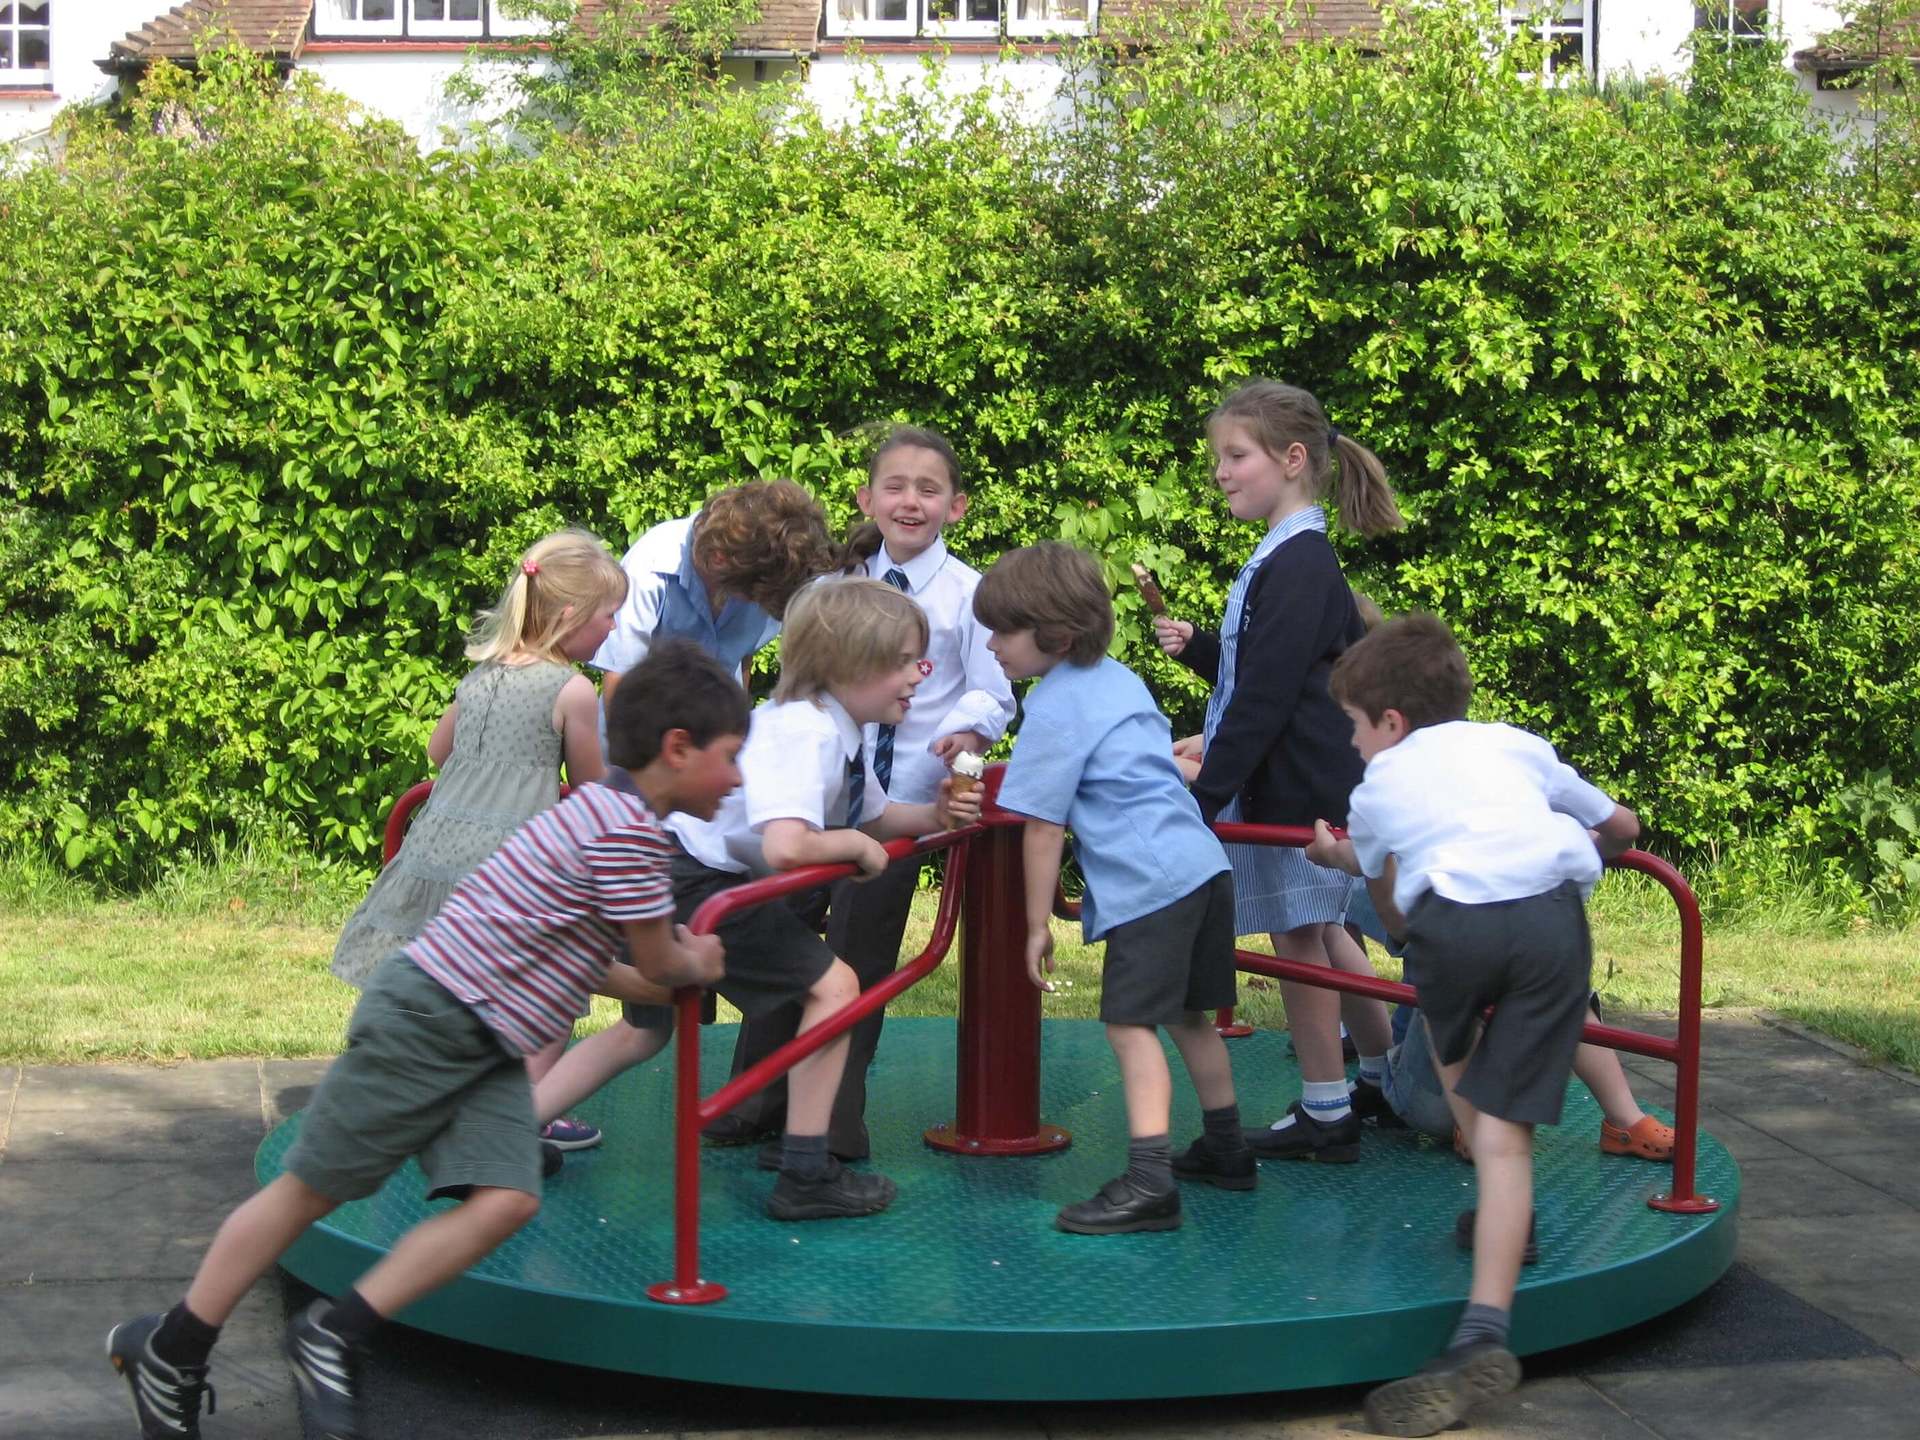 Children on Playground Roundabout